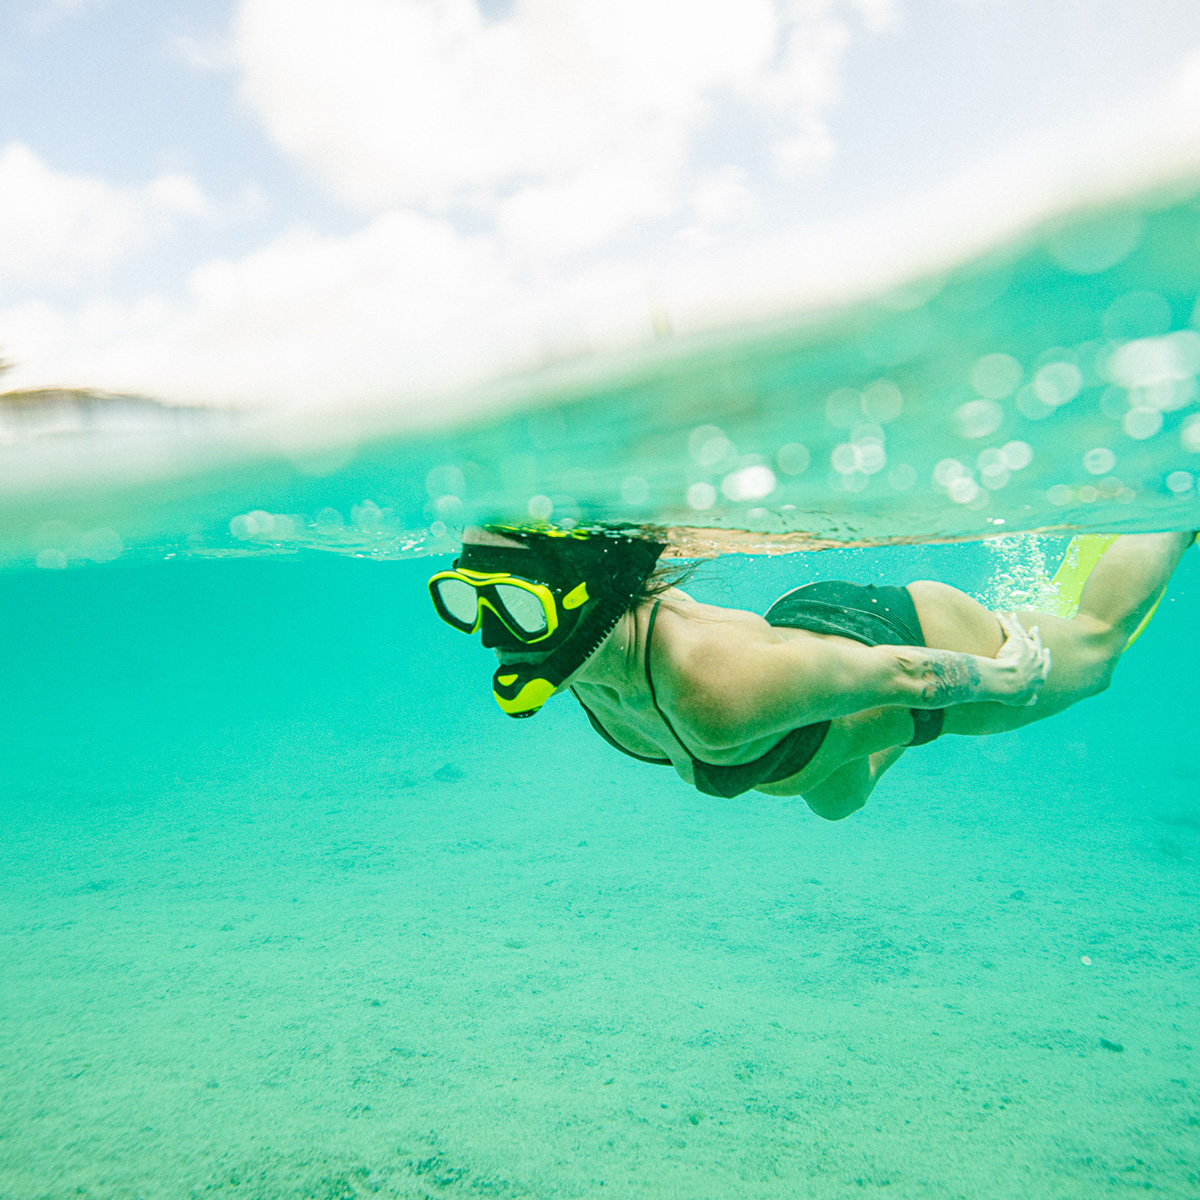 Underwater shot of a woman snorkeling